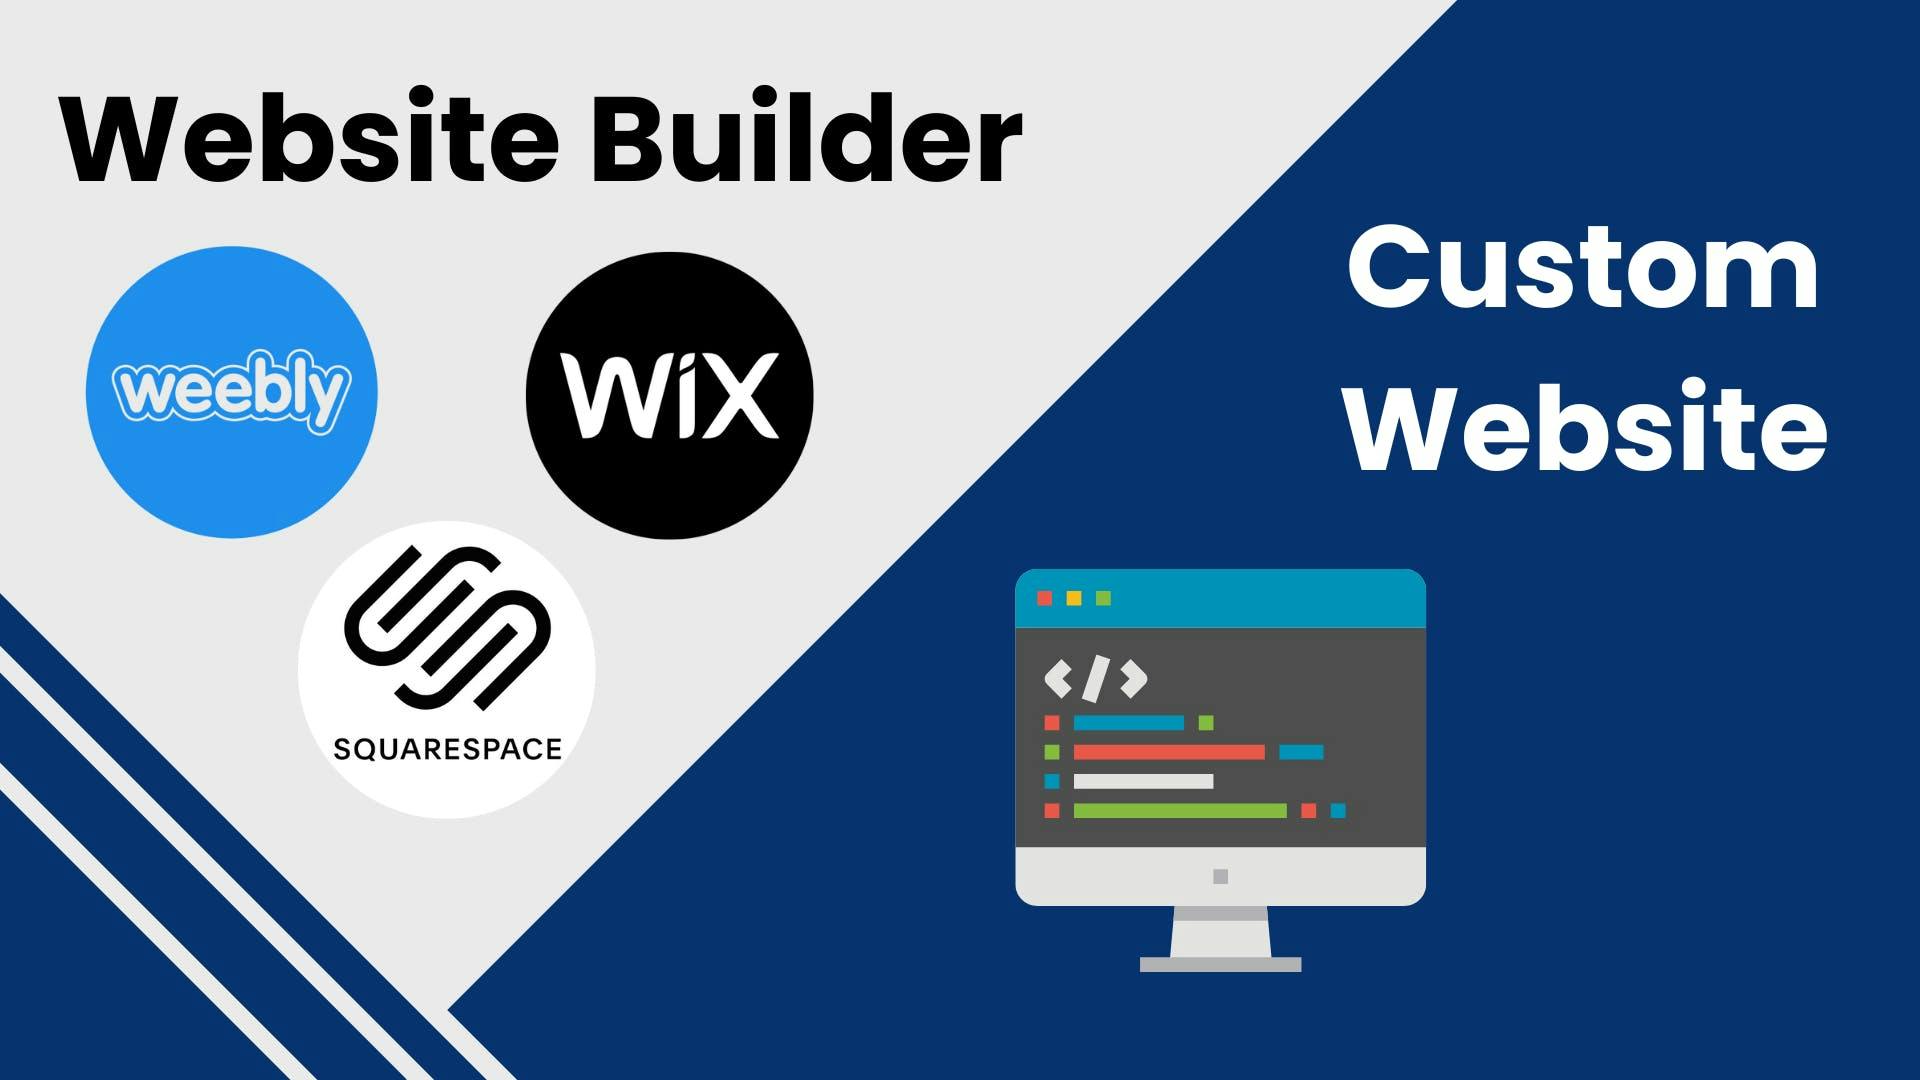 Website Builder vs Custom Website